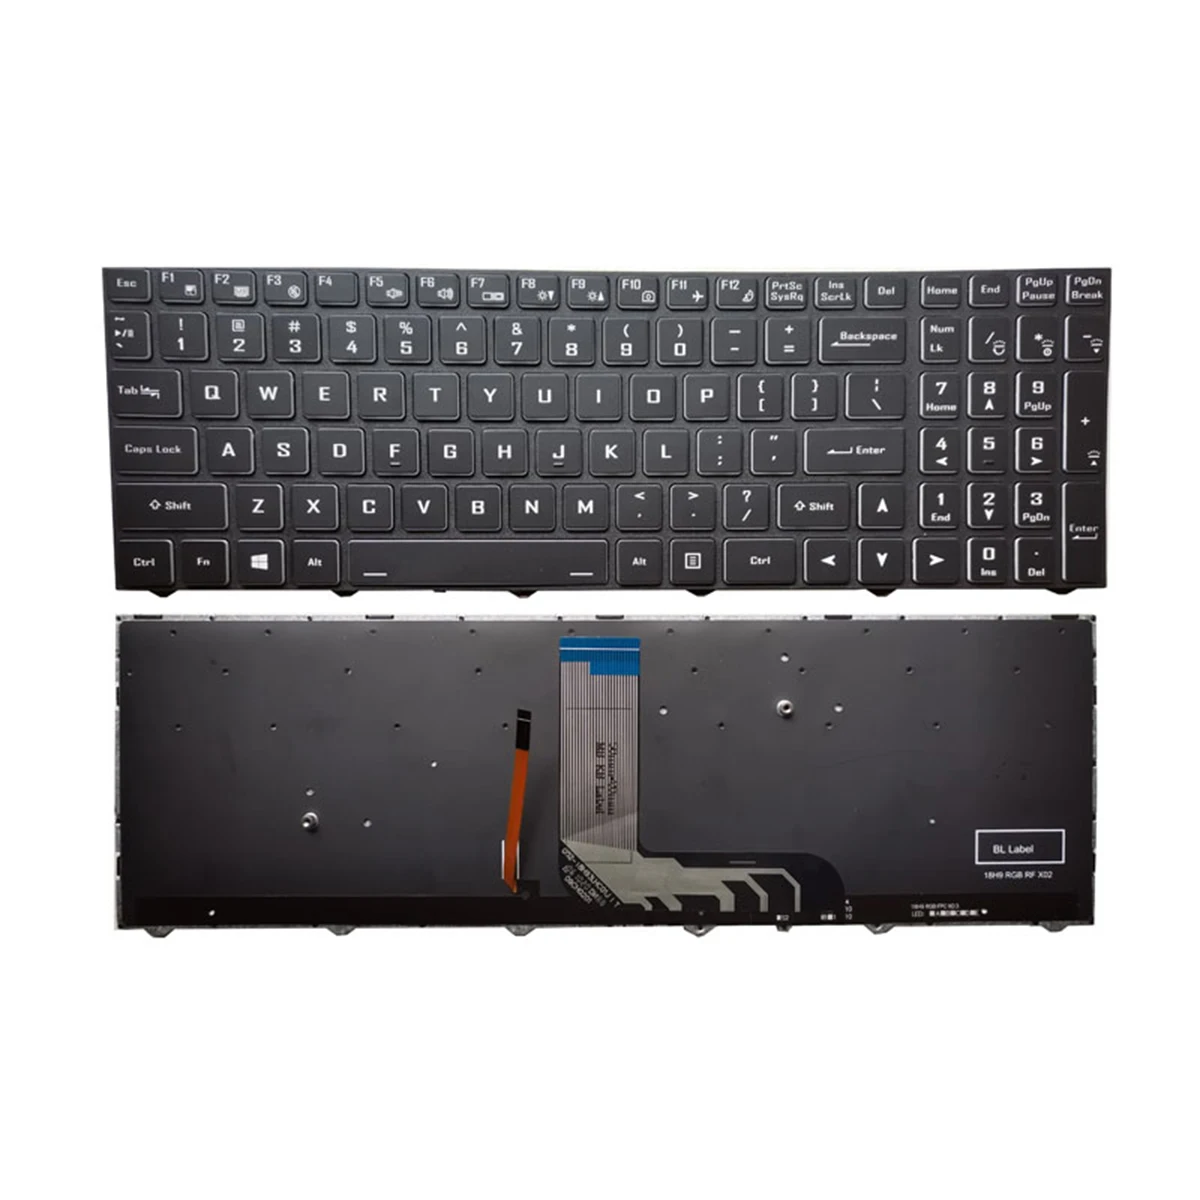 

US Backlight keyboard for Hasee GX9 GX8 TX9 TX8 TX7 for Clevo N960 N970 system76 ORYX Pro 6 80 N815Z0 01D 1 black laptops KB new